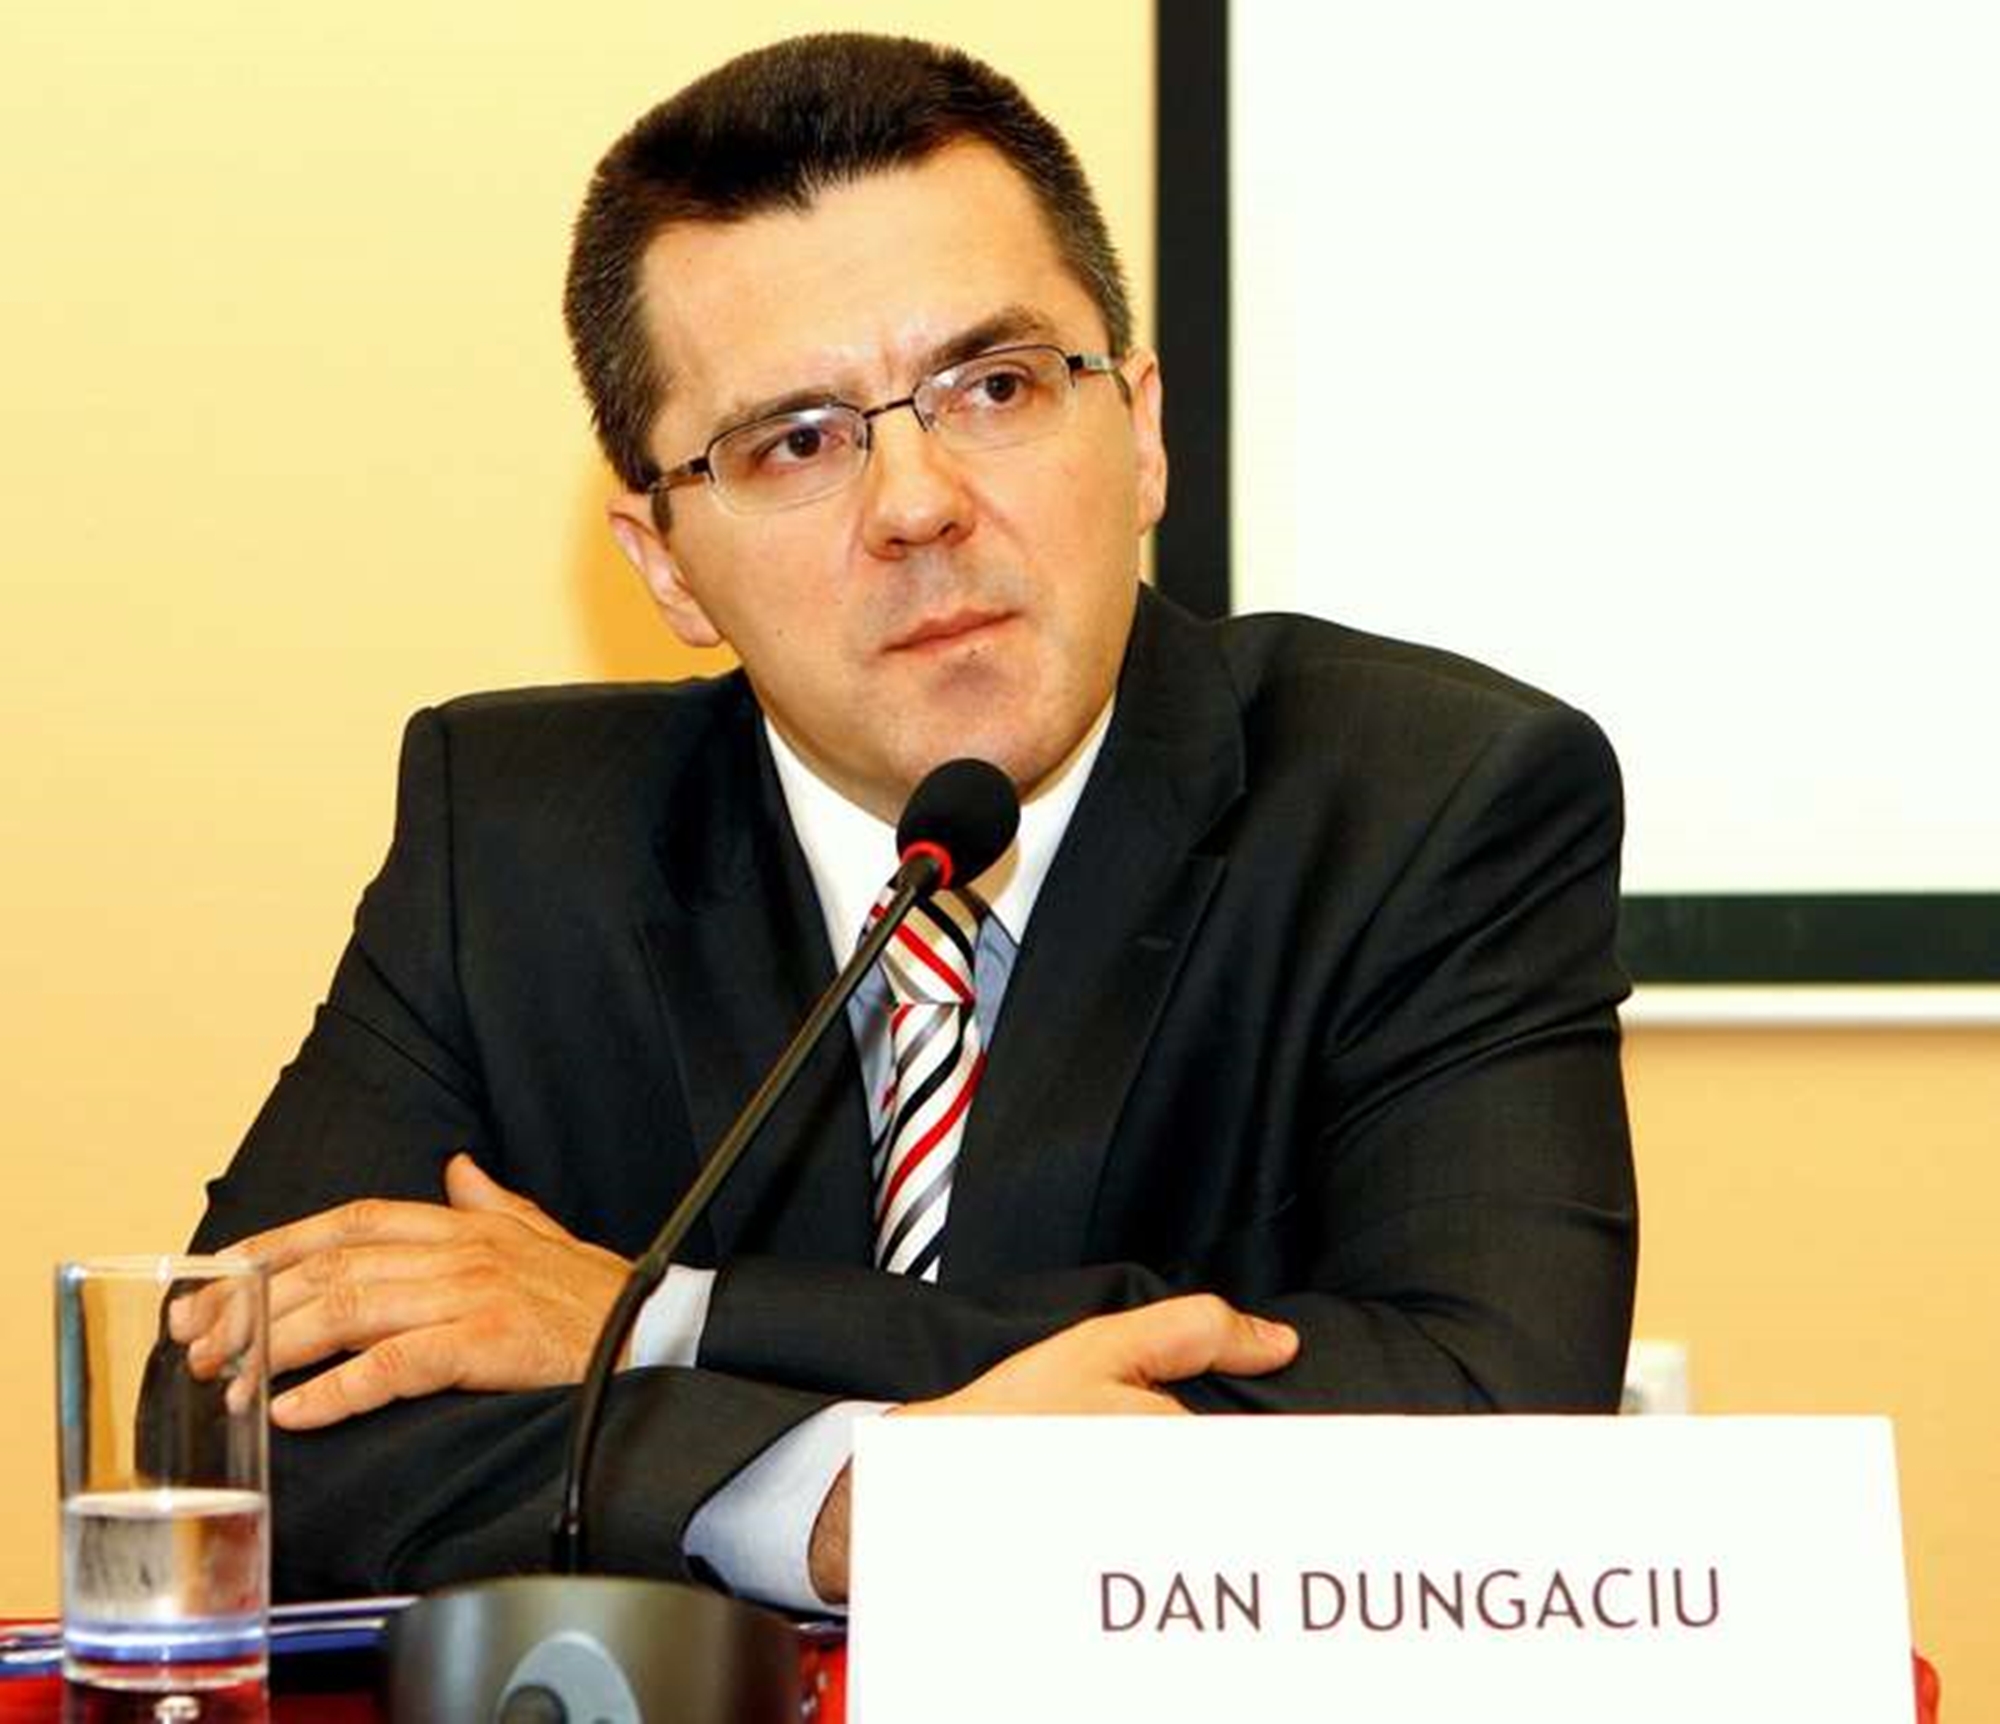 Dan Dungaciu